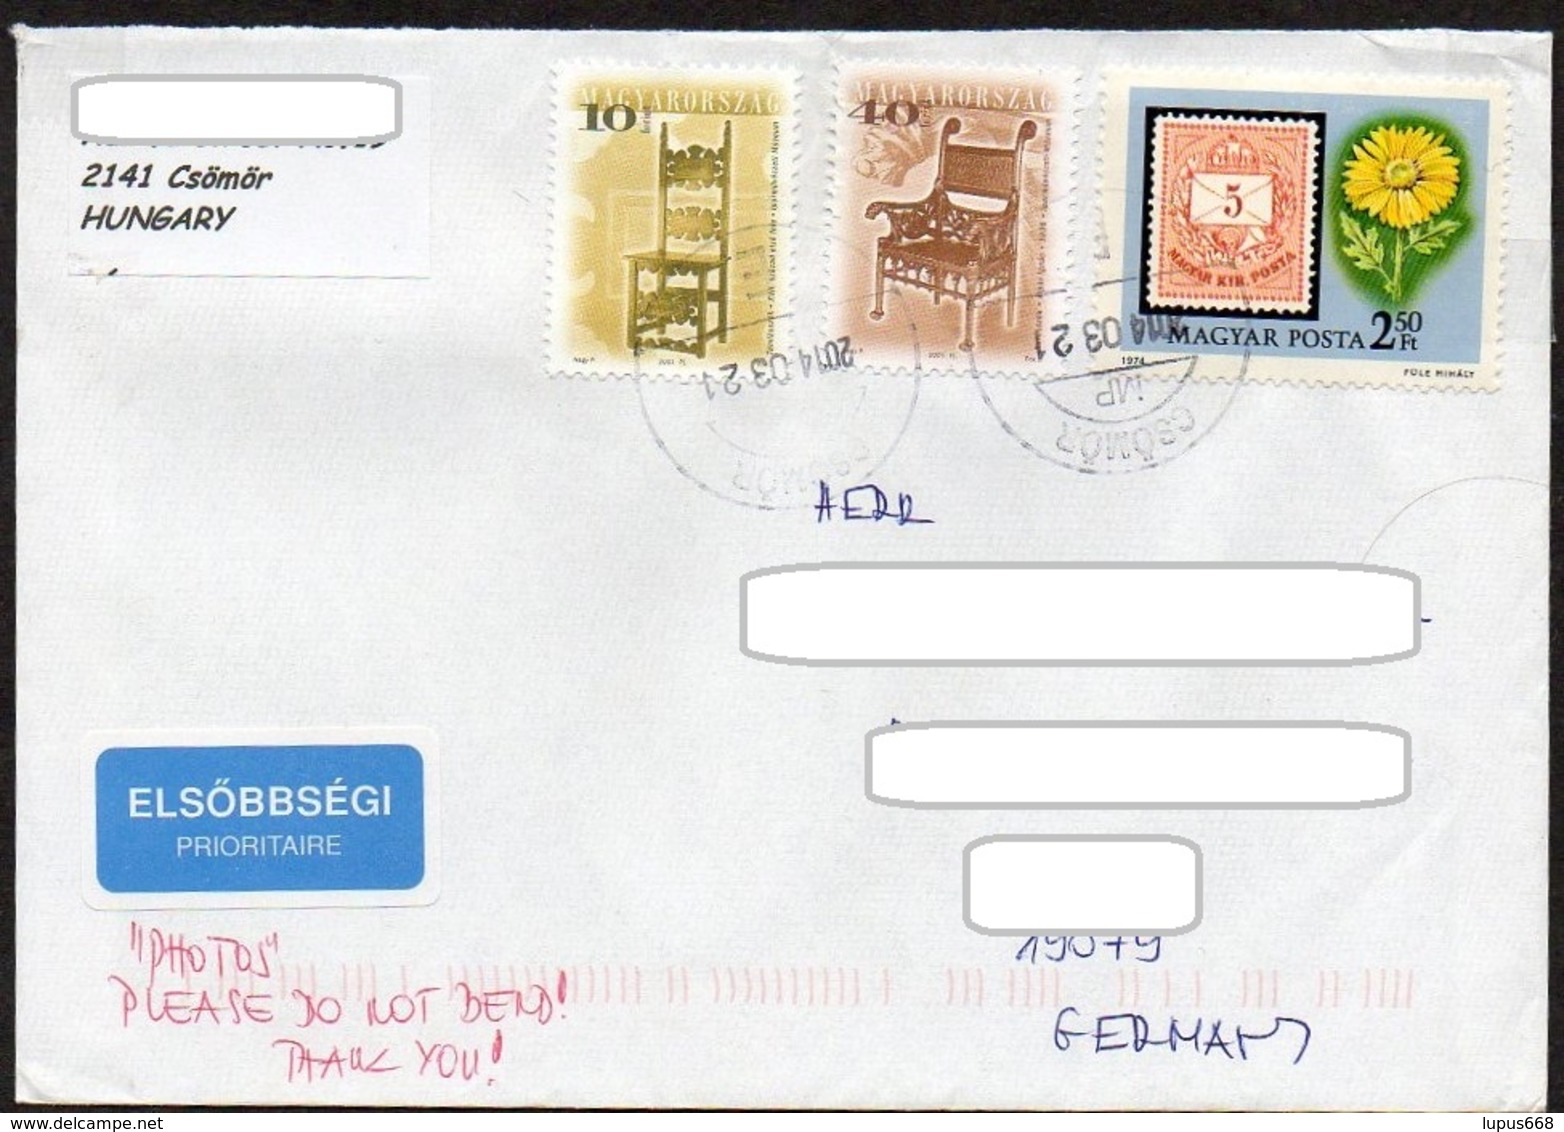 Ungarn 2014  MiNr. 2943, 4647, 4561  Brief/ Letter  In Die BRD - Lettere